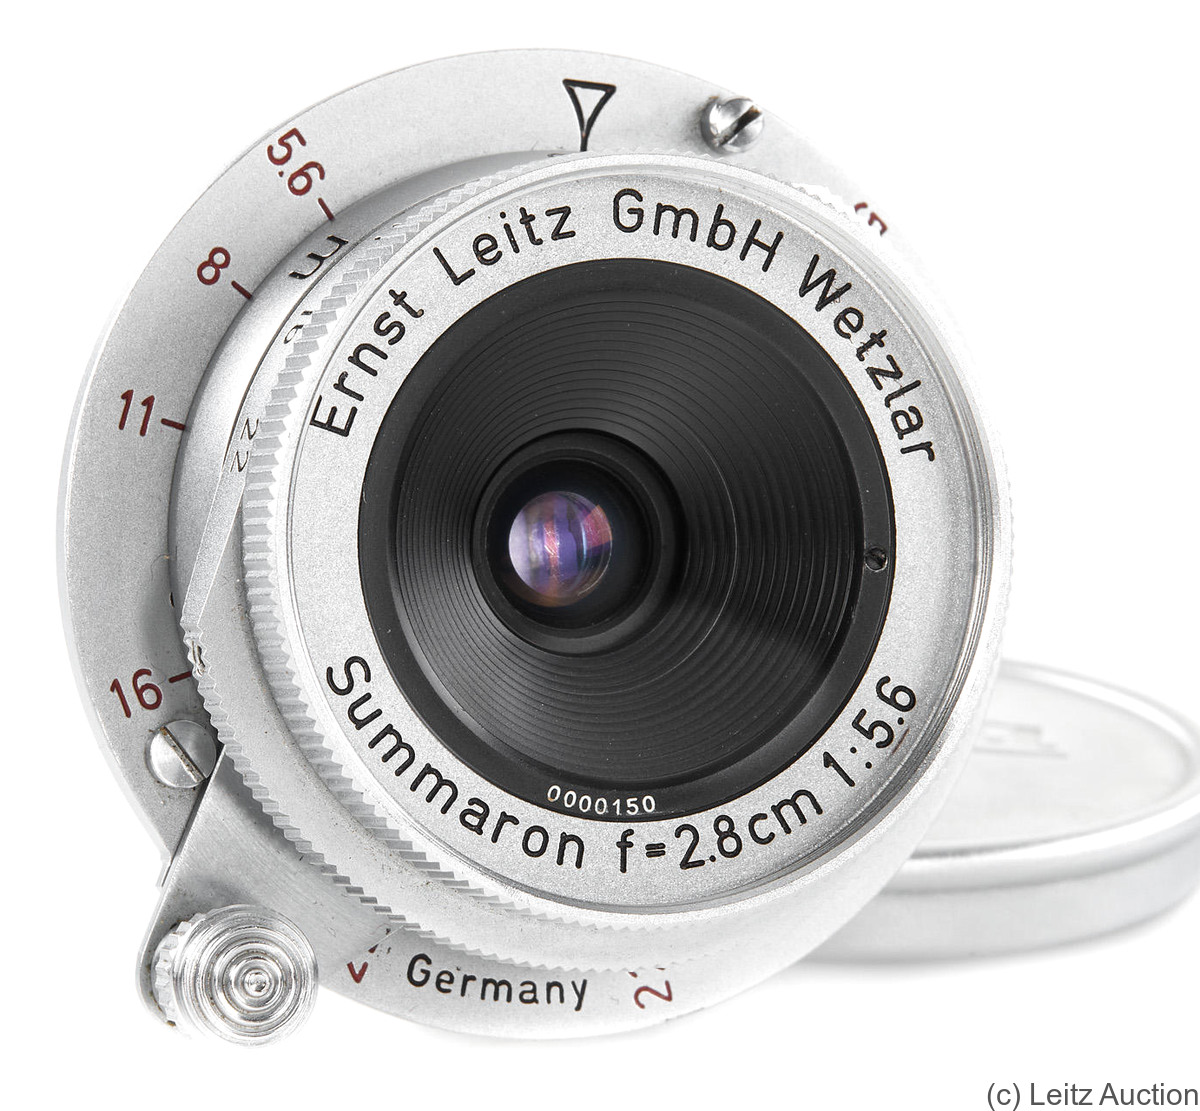 Leitz: 28mm (2.8cm) f5.6 Summaron (SM, prototype) camera